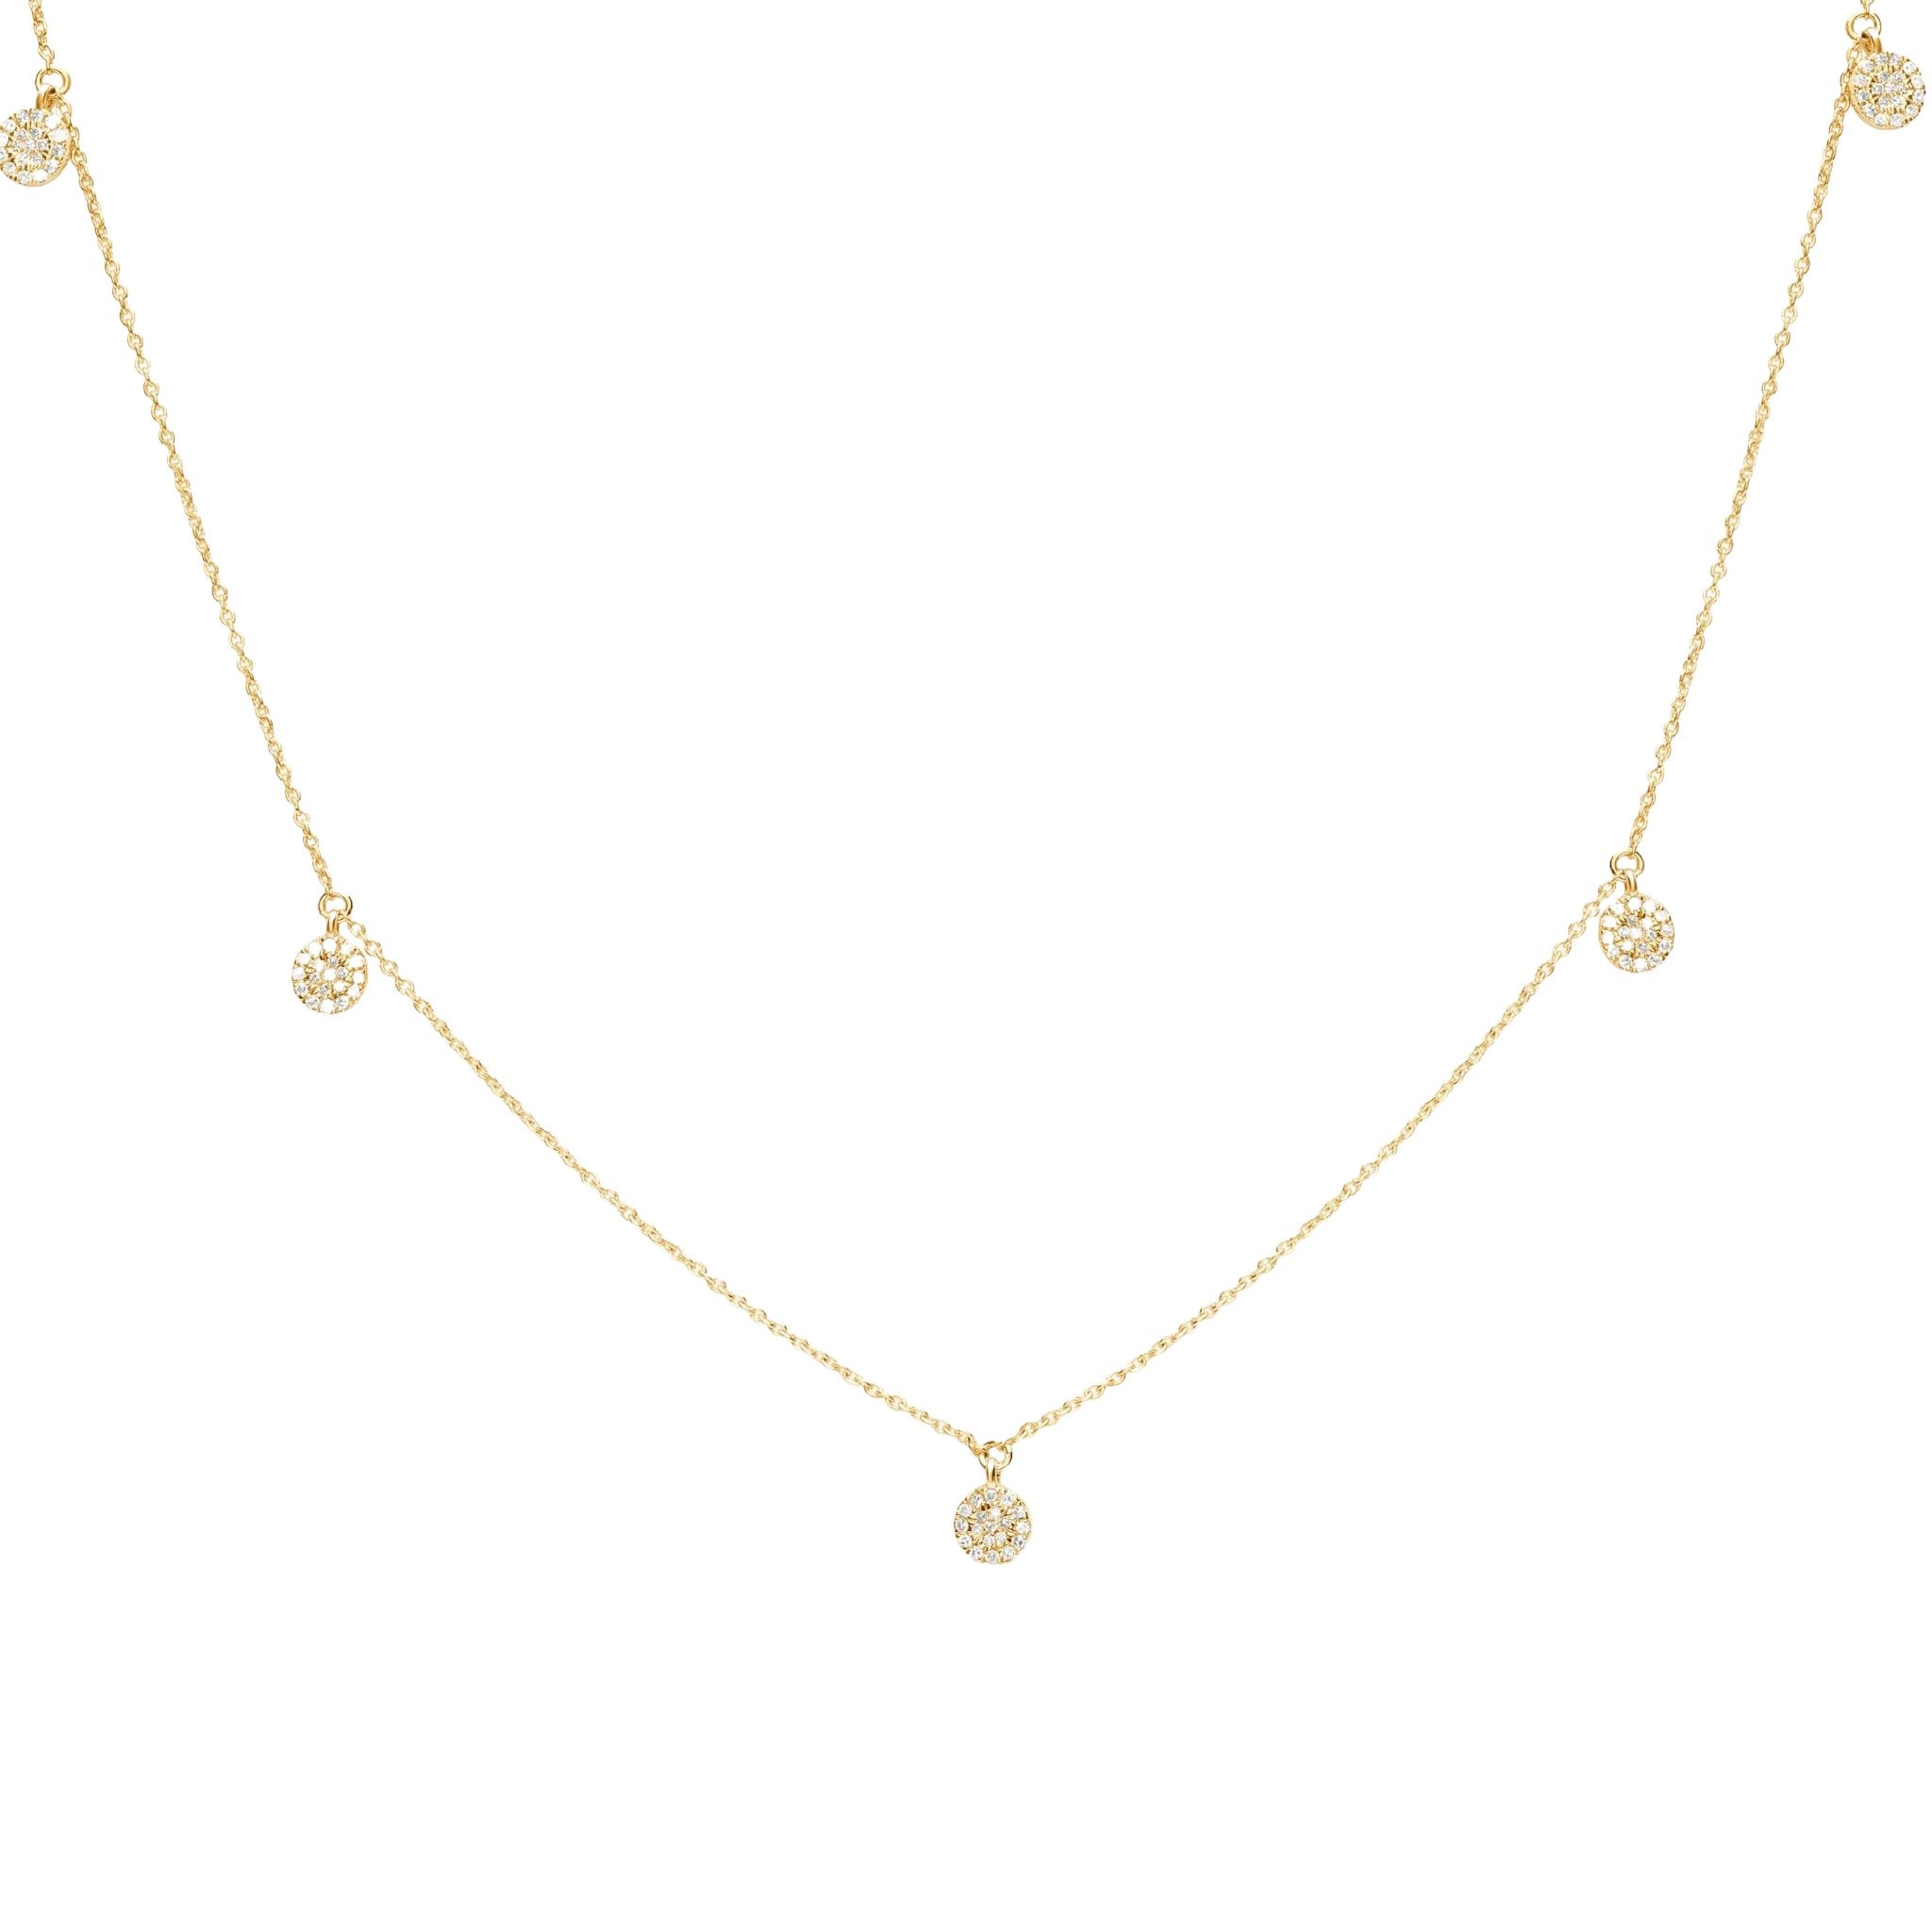 Diamond Station Necklace Necklaces Estella Collection #product_description# 17708 14k Chain Diamond #tag4# #tag5# #tag6# #tag7# #tag8# #tag9# #tag10#